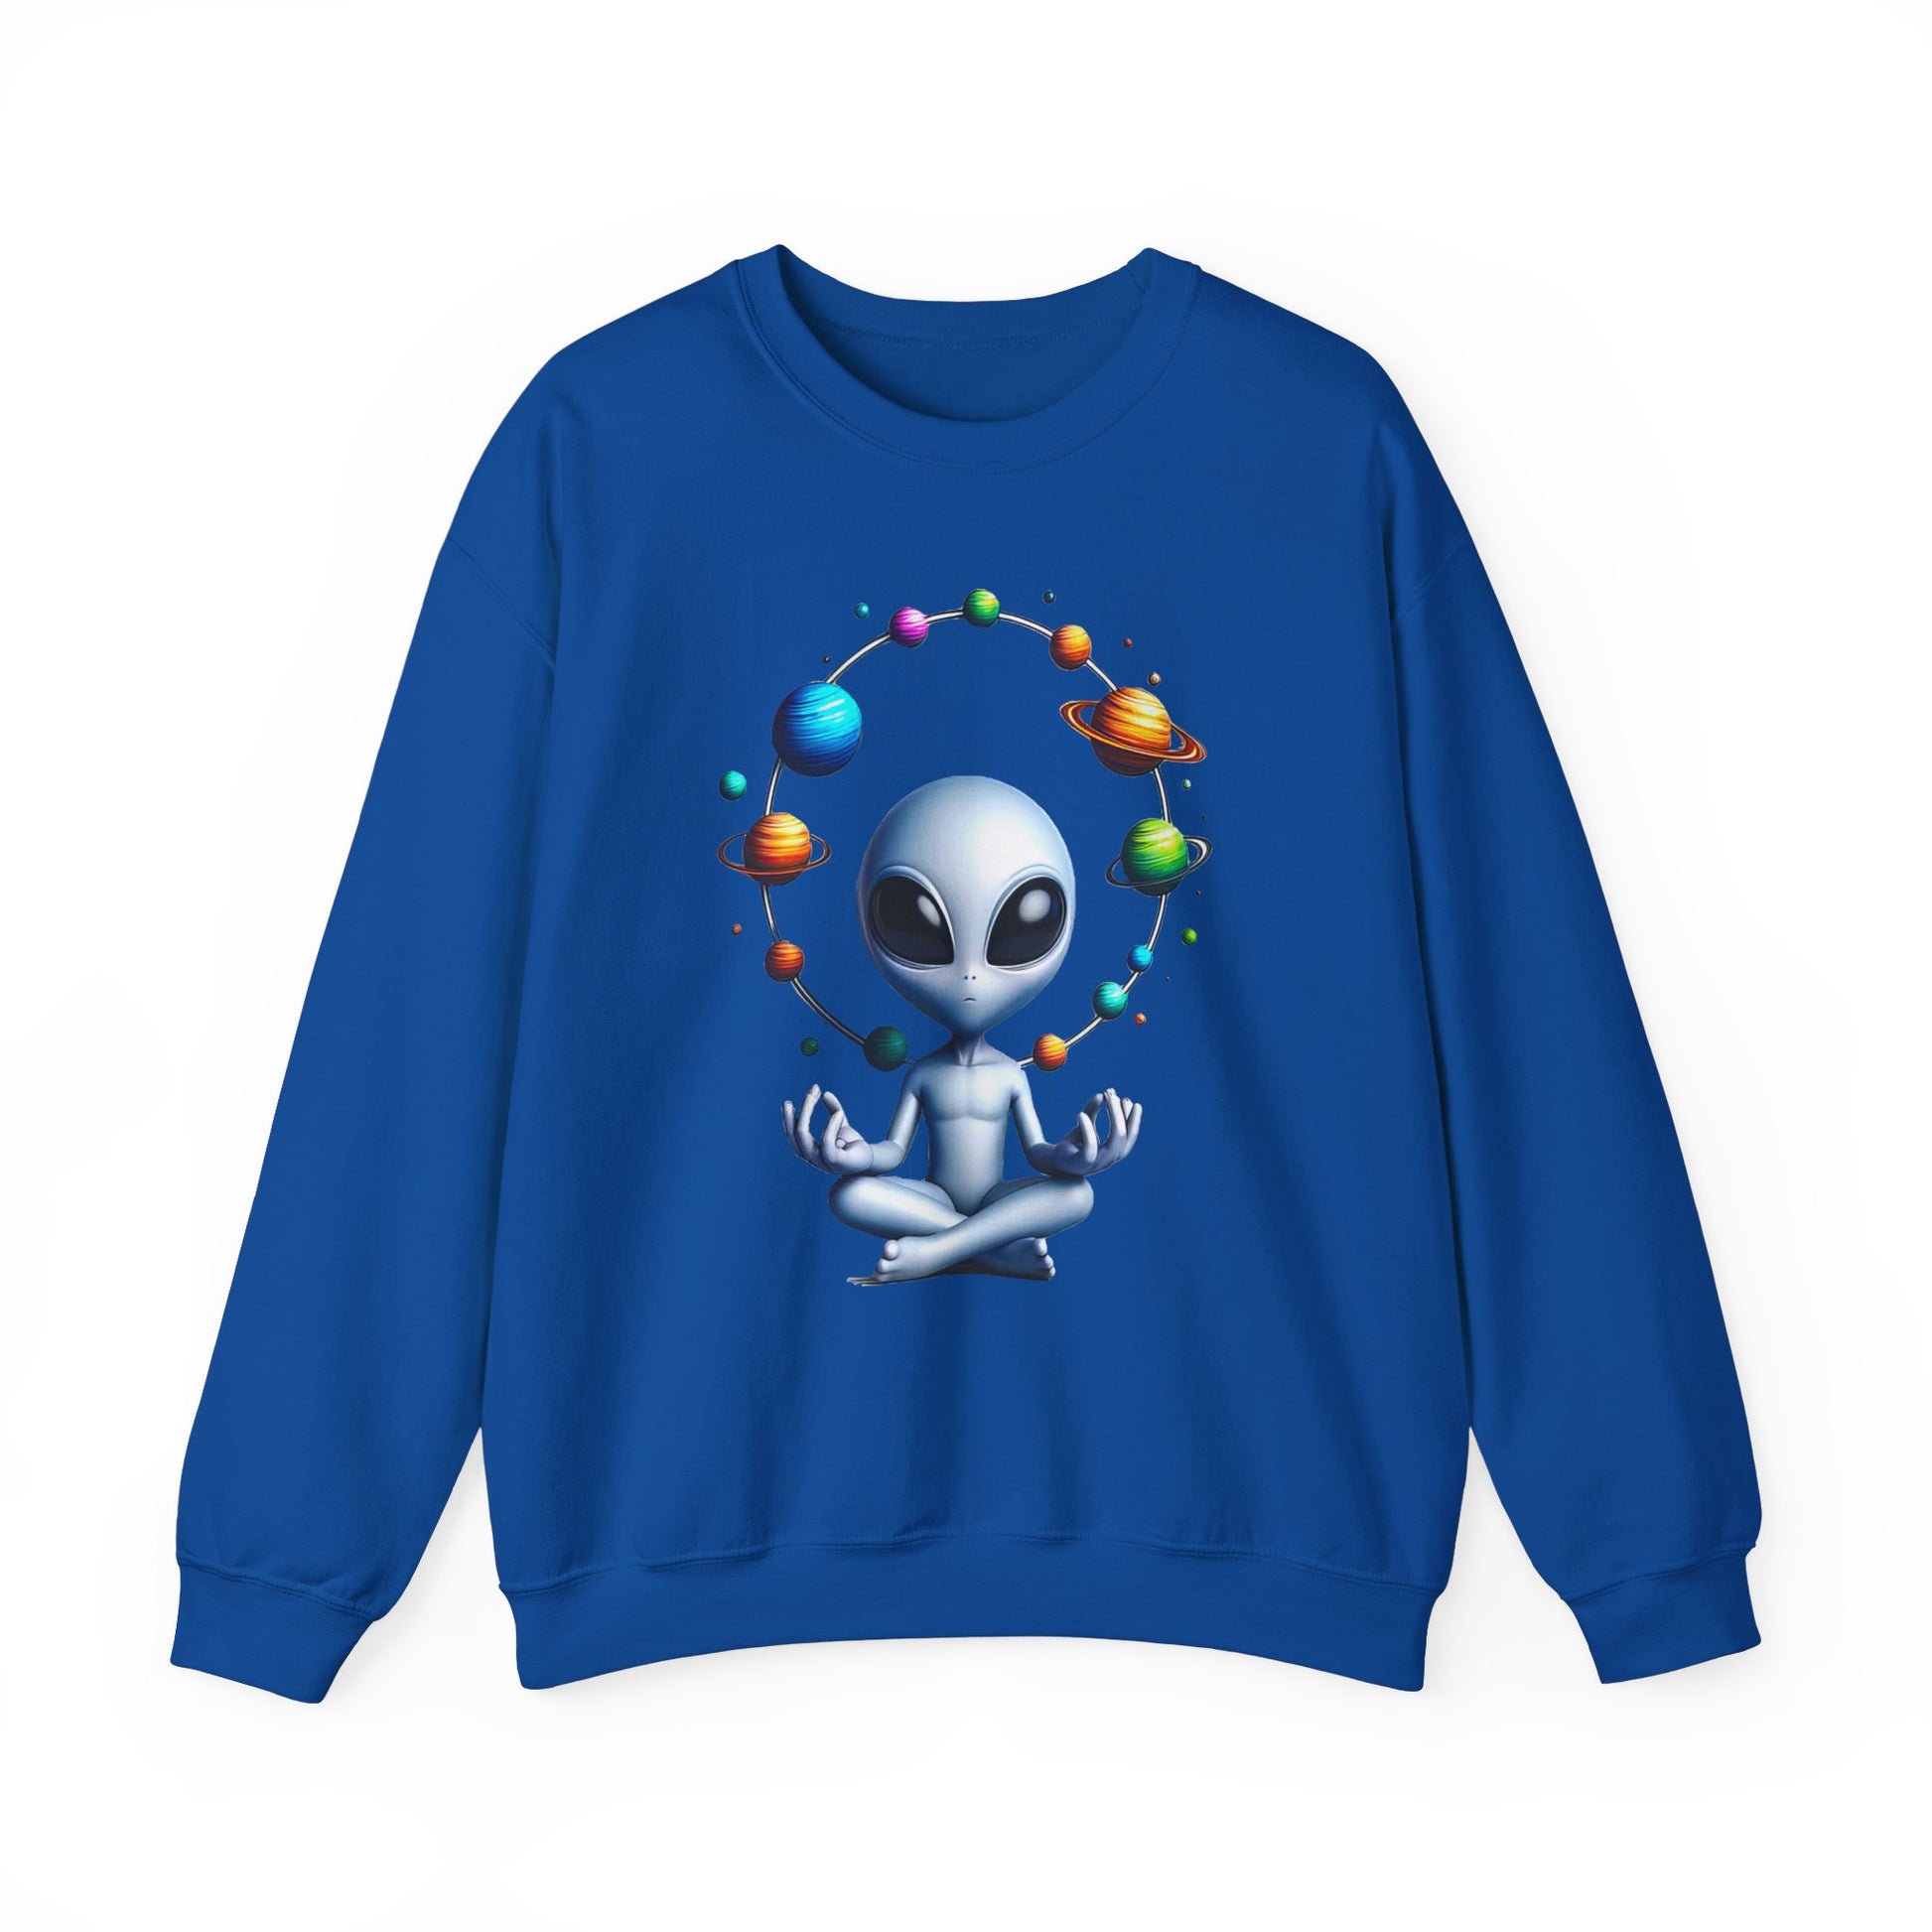 Generation Mood's Meditation in the Cosmos: Alien Sweatshirt , Find Your Zen Among the Planets Sweatshirt. Royal Blue